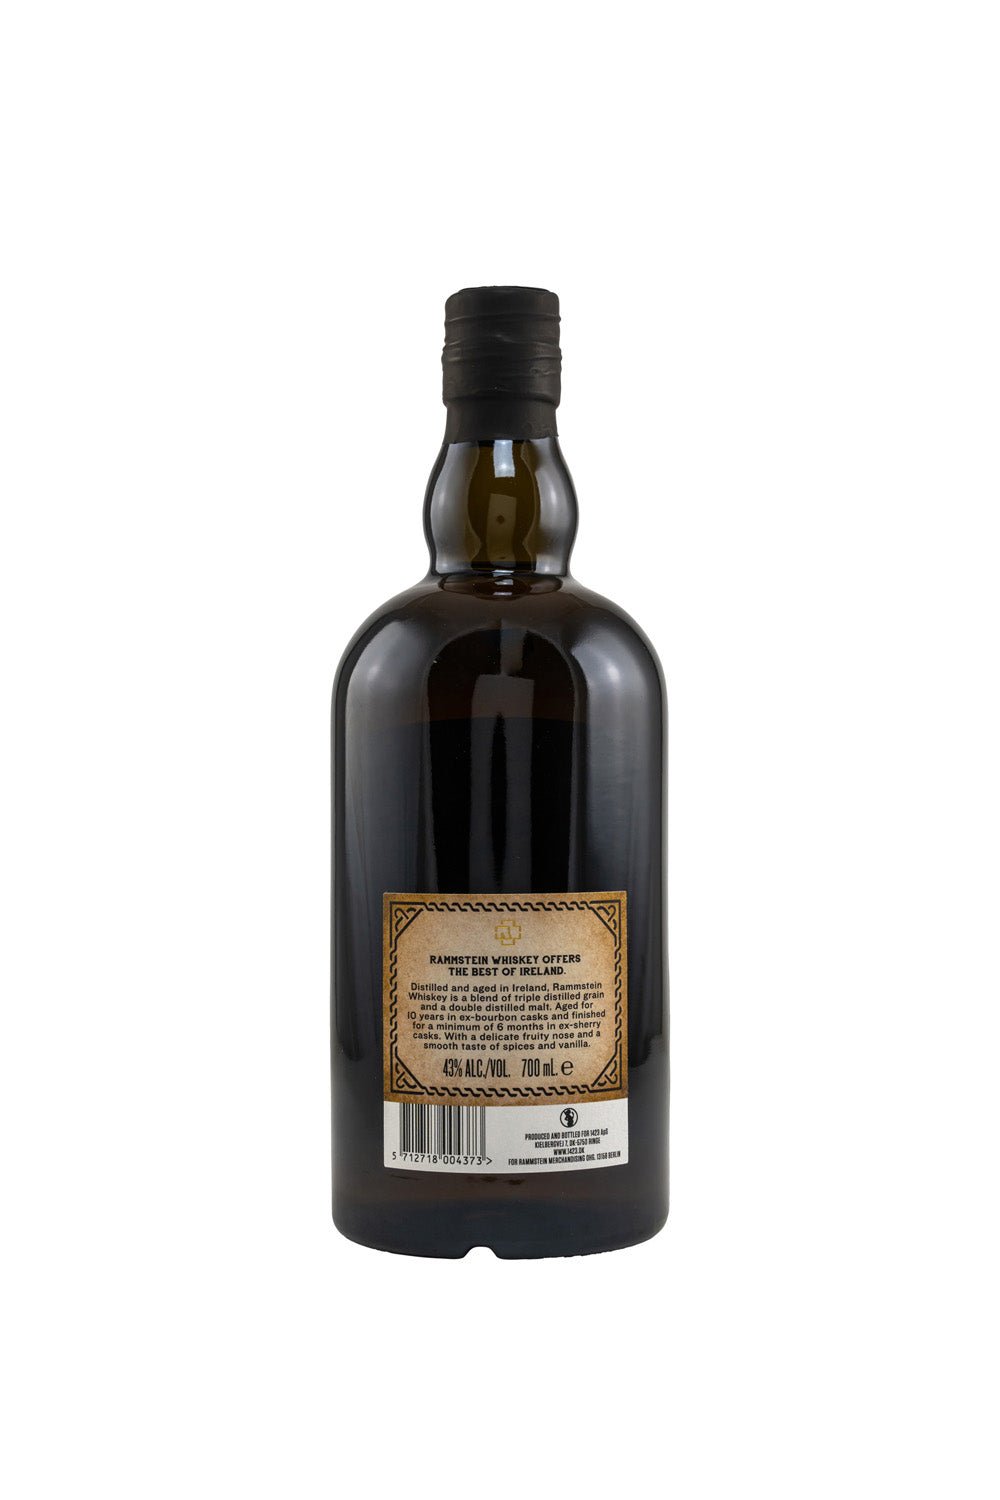 Rammstein 10 Jahre Irish Whiskey 43% vol. 700ml - Maltimore